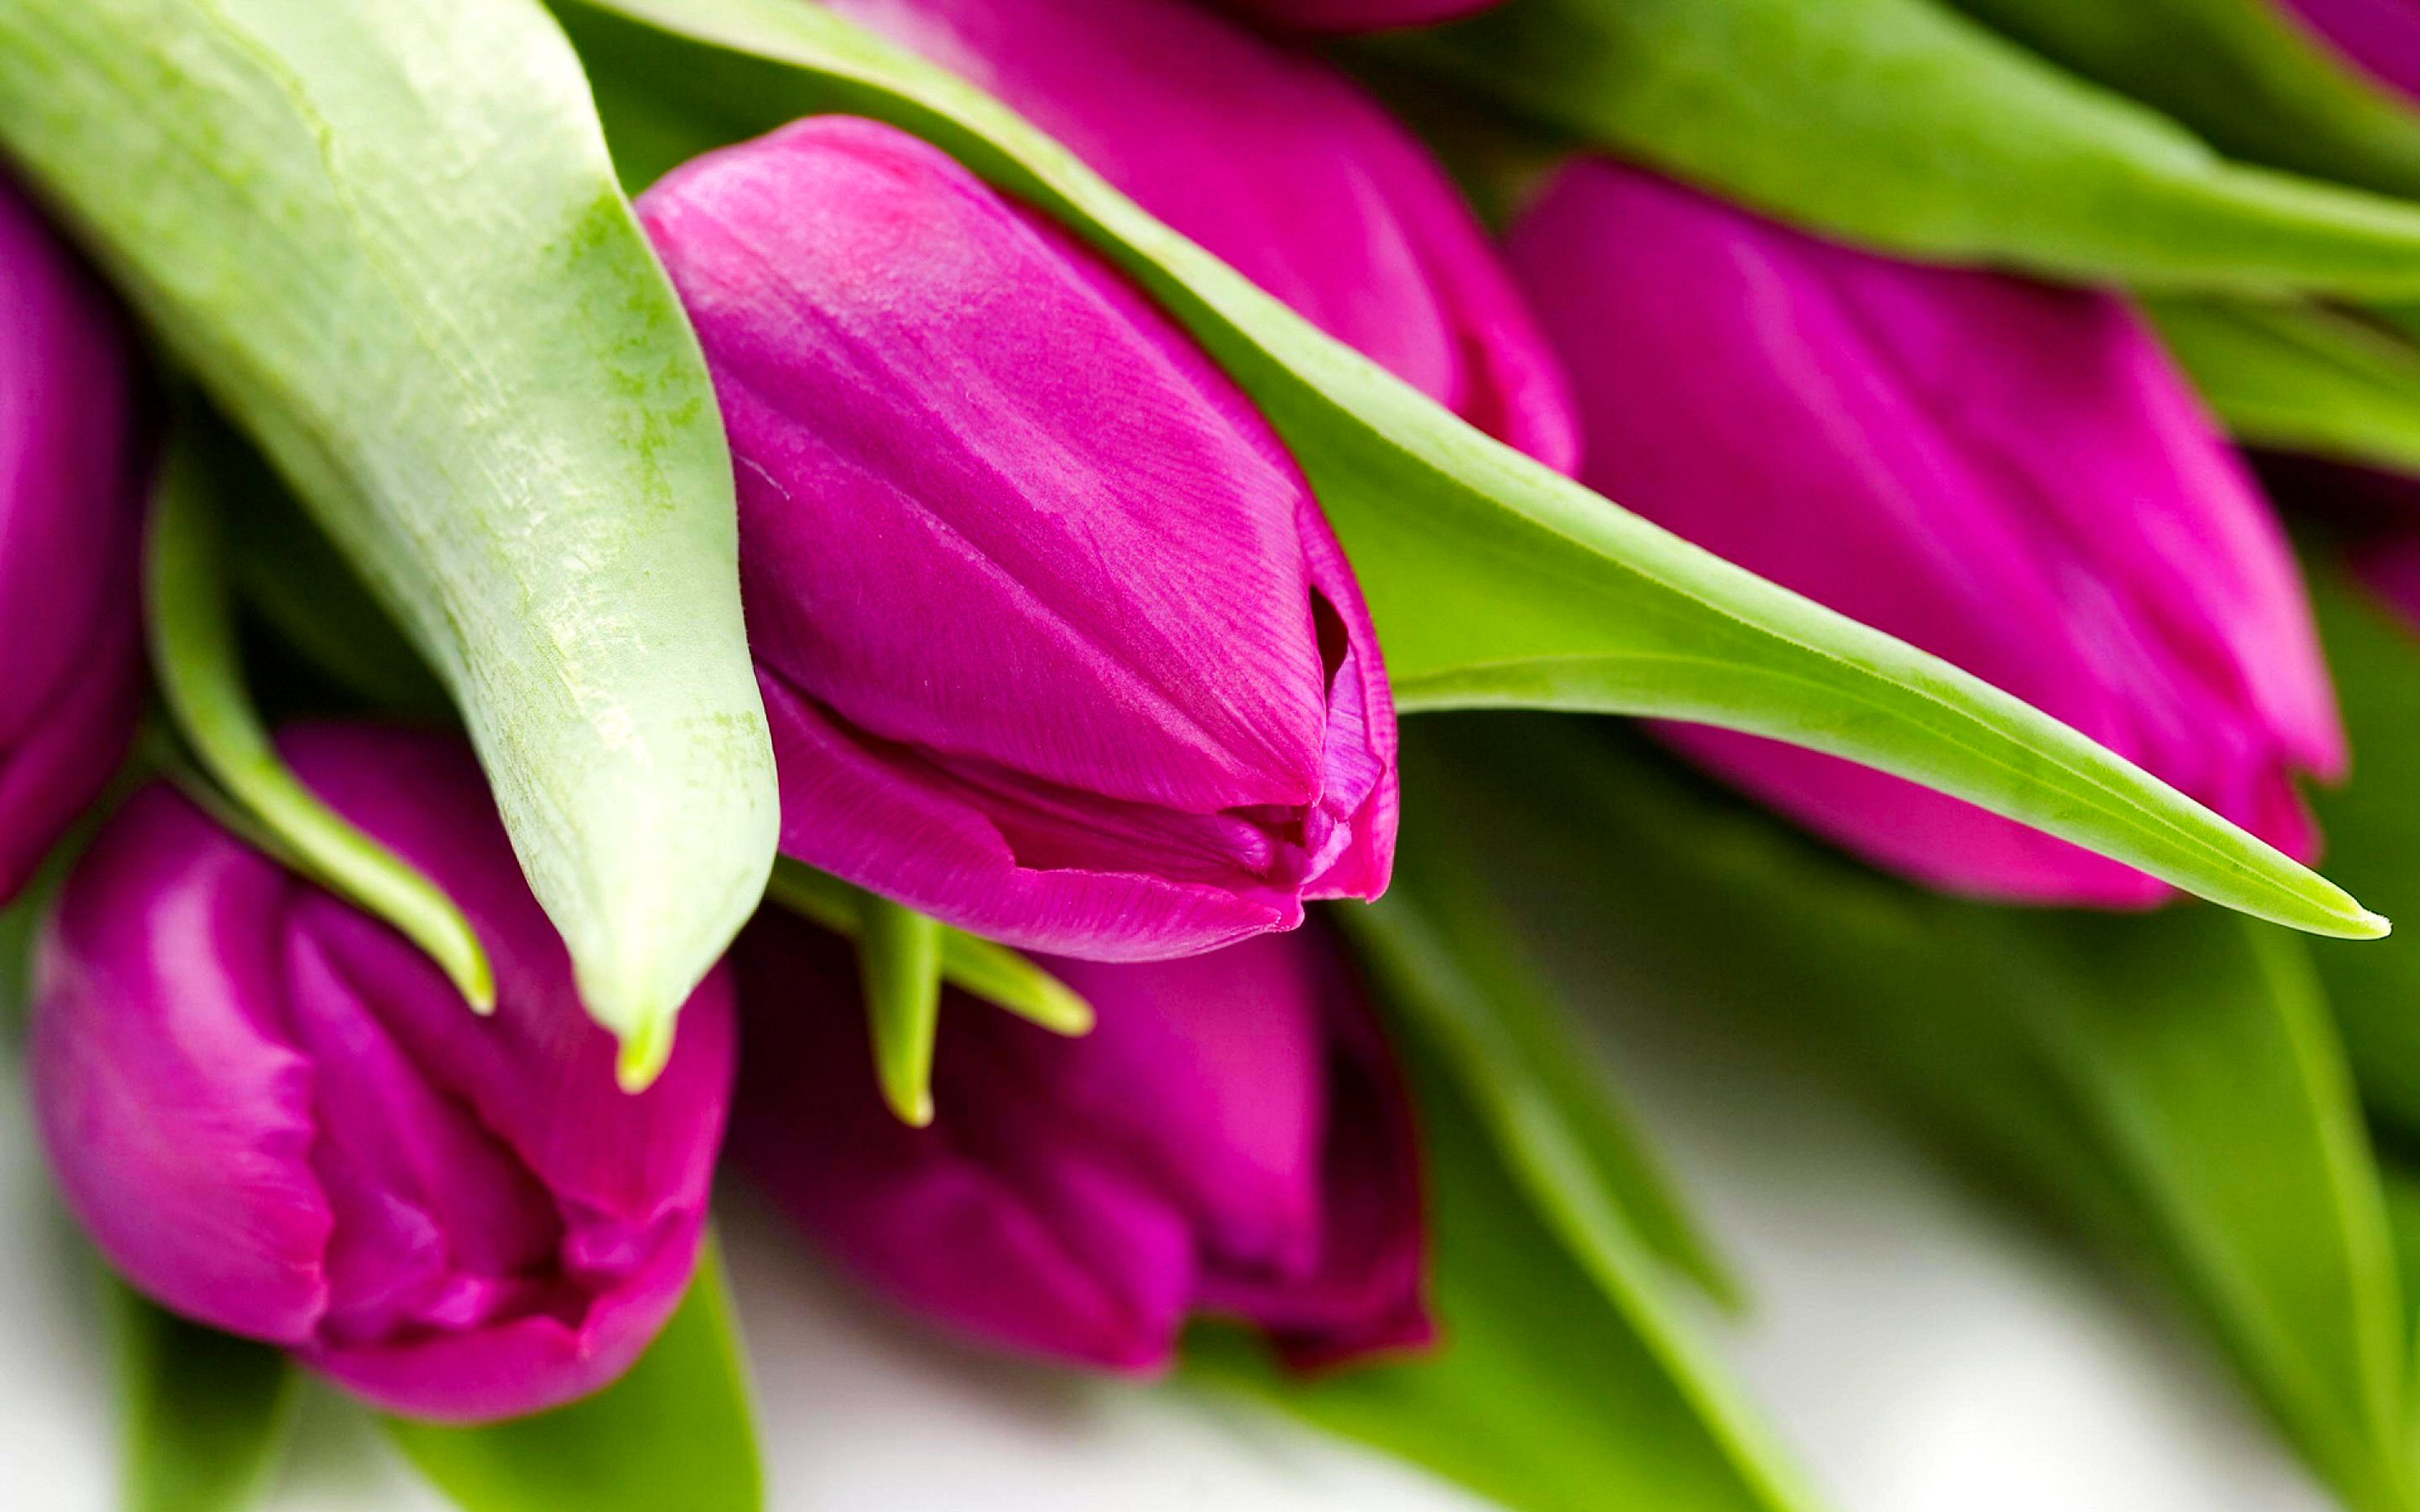 278246 descargar imagen tierra/naturaleza, tulipán, flor, flor rosa, flores: fondos de pantalla y protectores de pantalla gratis